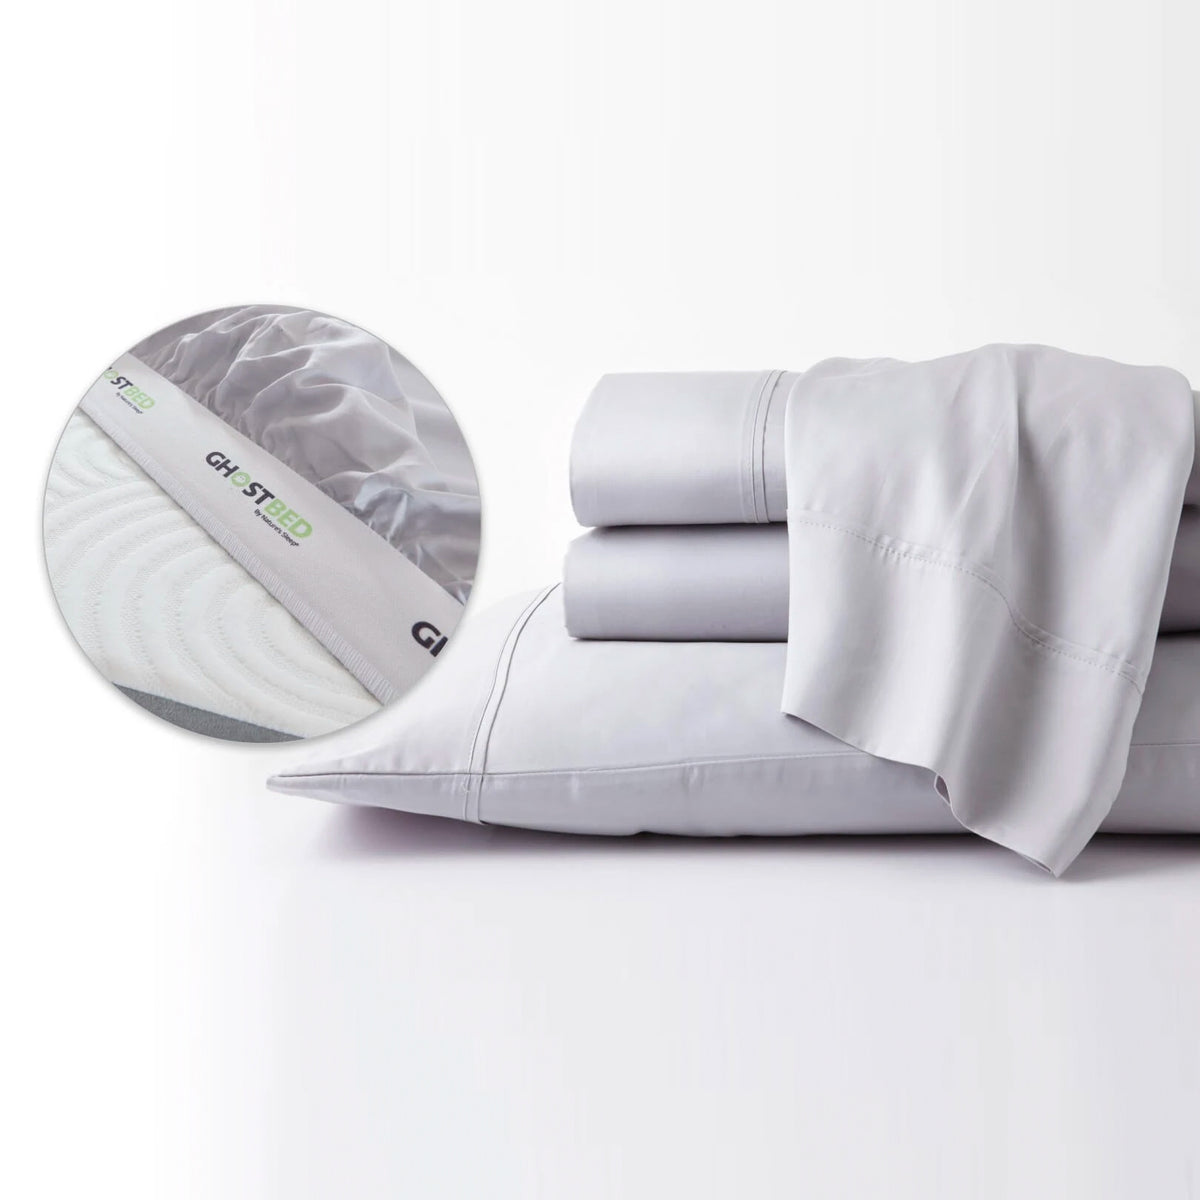 Hospitality Bulk Set of 6 White Flat Bed Sheets - Easy Care (Assorted Sizes)